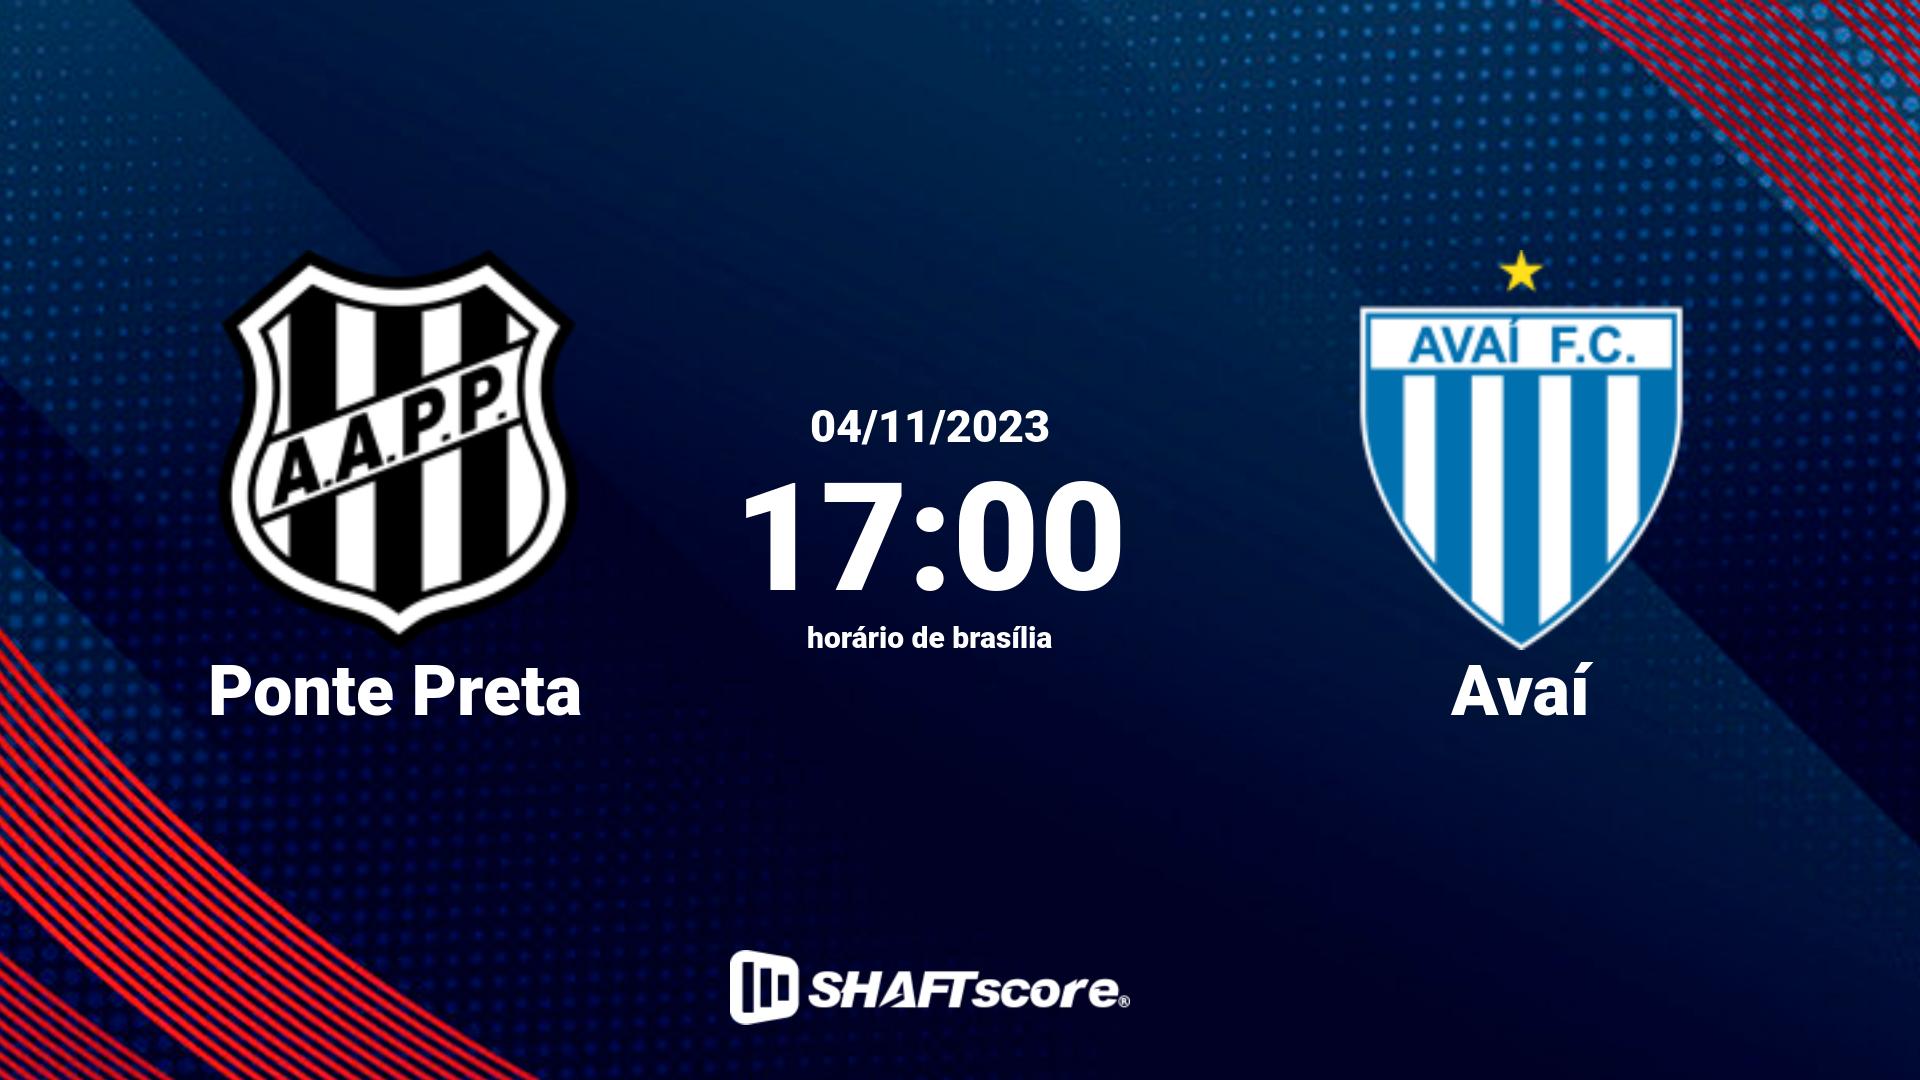 Estatísticas do jogo Ponte Preta vs Avaí 04.11 17:00